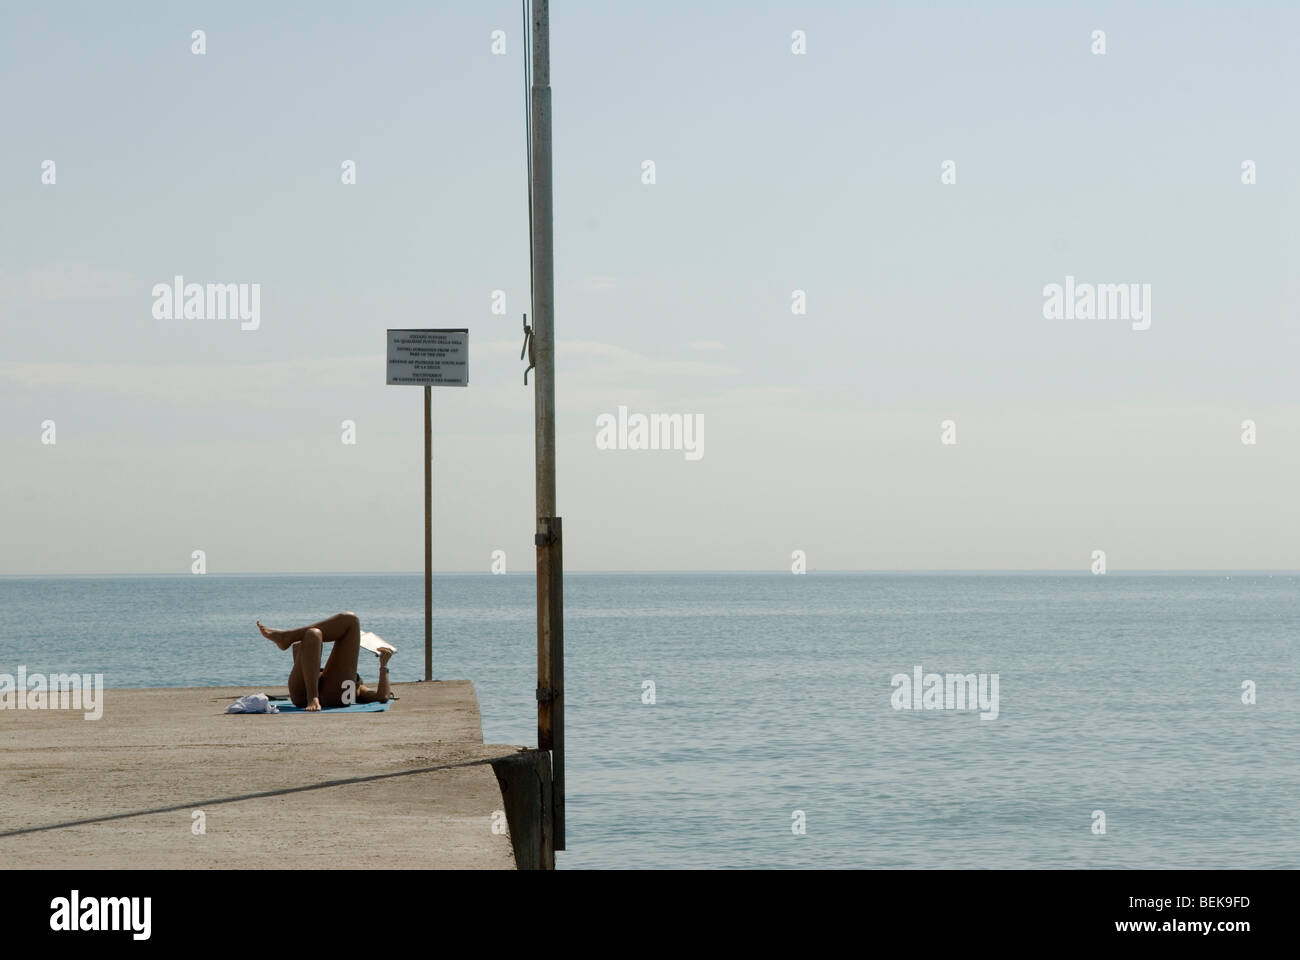 Venice Italy Venice Lido Adriatic sea the public beach. Woman reading sunbathing avoiding other people on holiday. 2000s HOMER SYKES Stock Photo